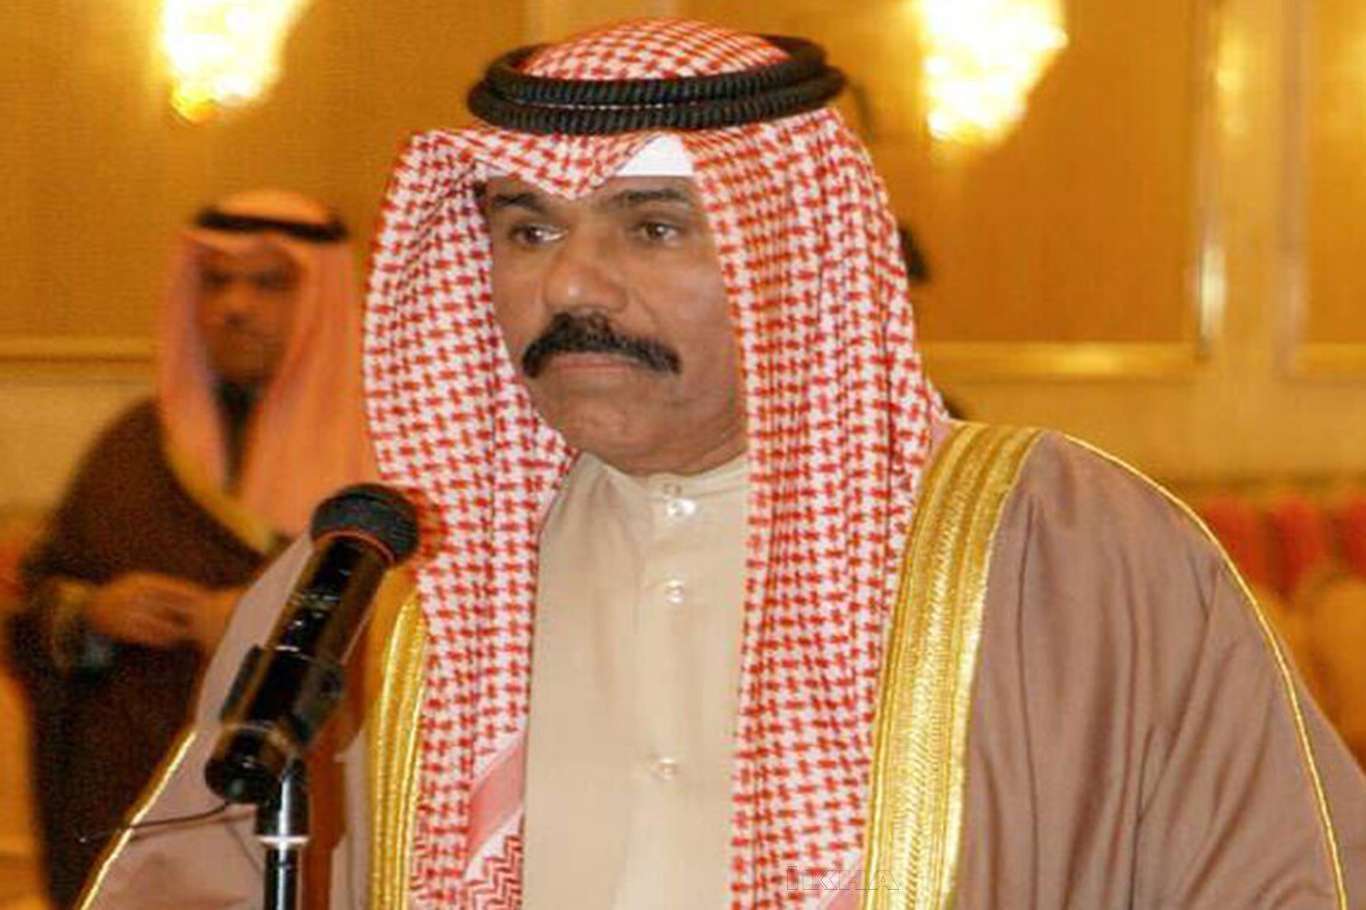 Sheikh Nawaf al-Sabah sworn in as new emir of Kuwait